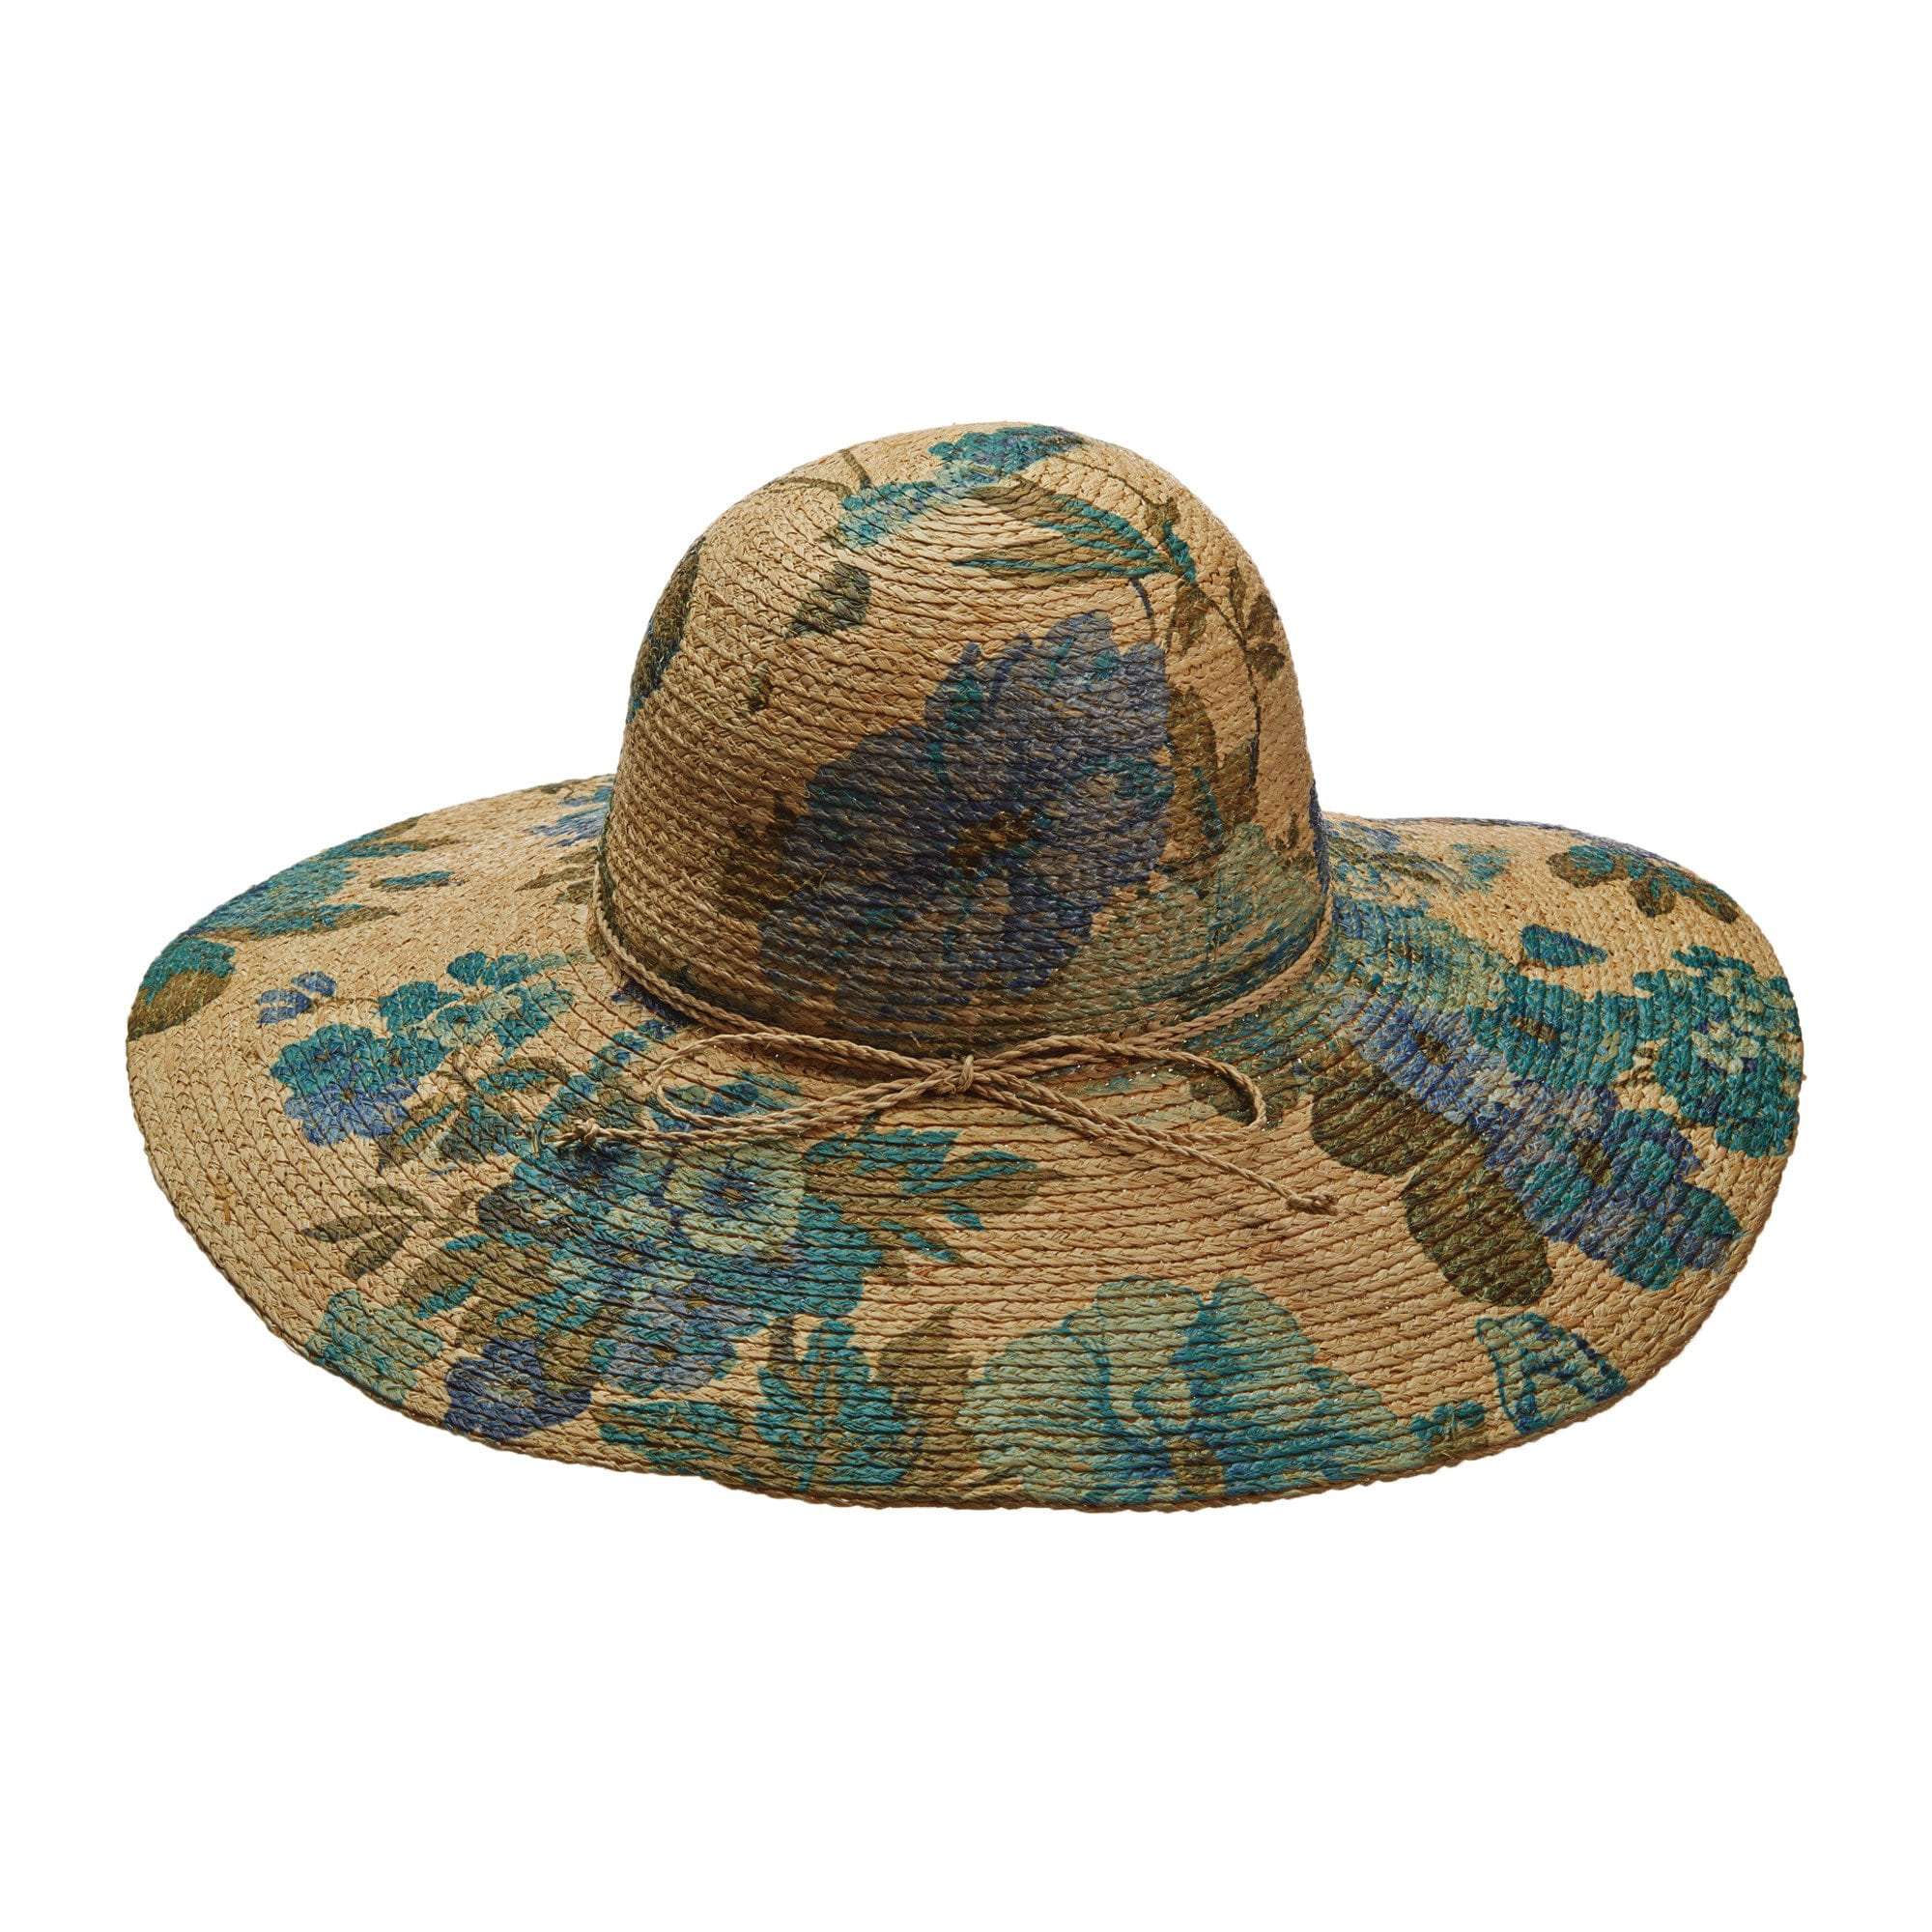 Raffia Summer Floppy Hat by Callanan Floppy Hat Callanan Hats    